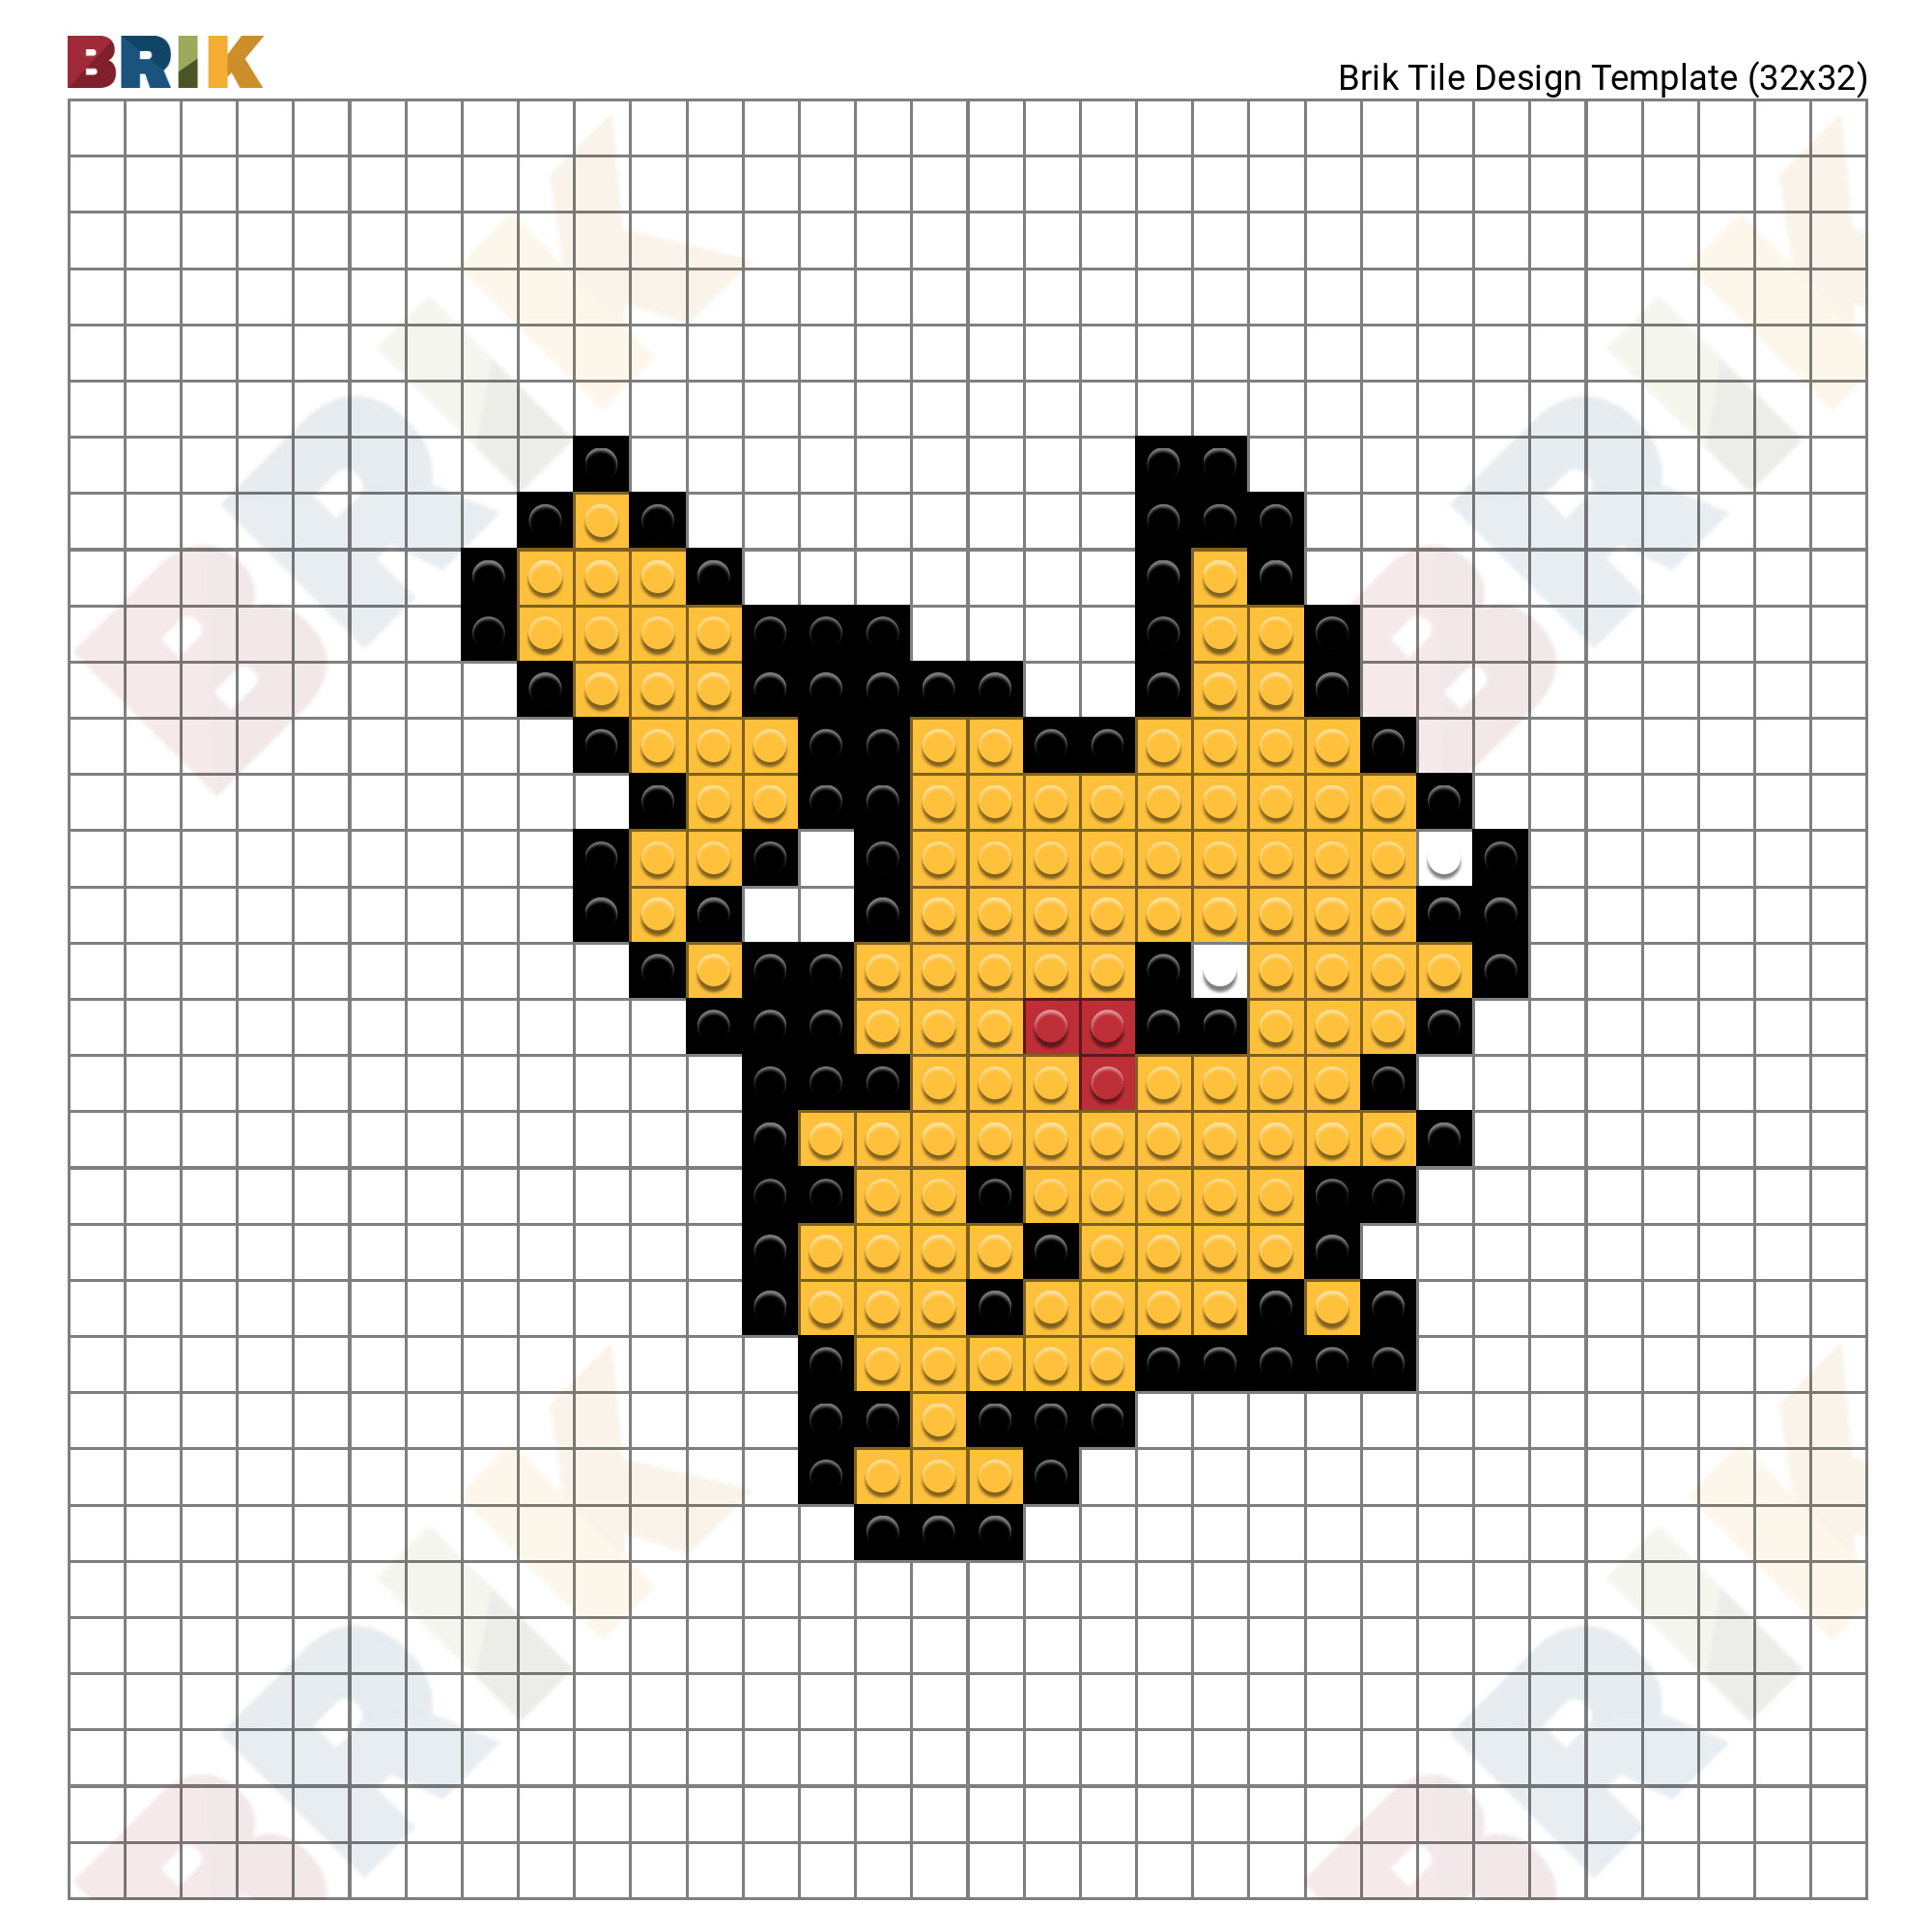 How To Draw Pikachu Pixel Art